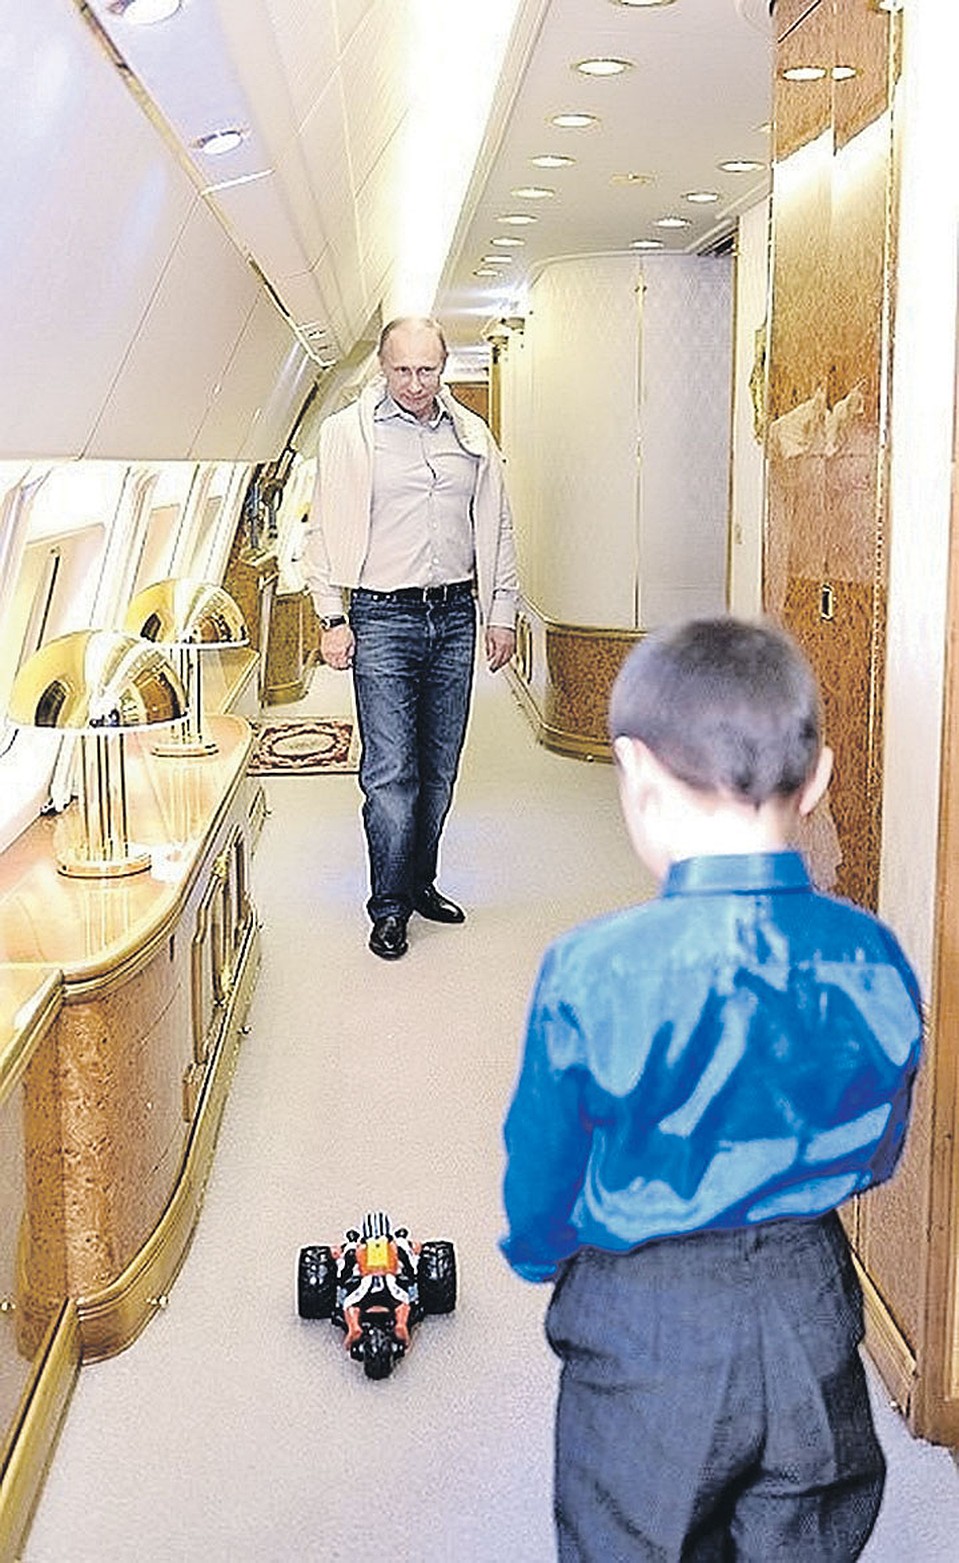 В лайнере Путина, как в вагоне, - длинный коридор, по которому президент даже как-то гонял машинки с сыном погибшего бойца МЧС. Фото: GLOBAL LOOK PRESS